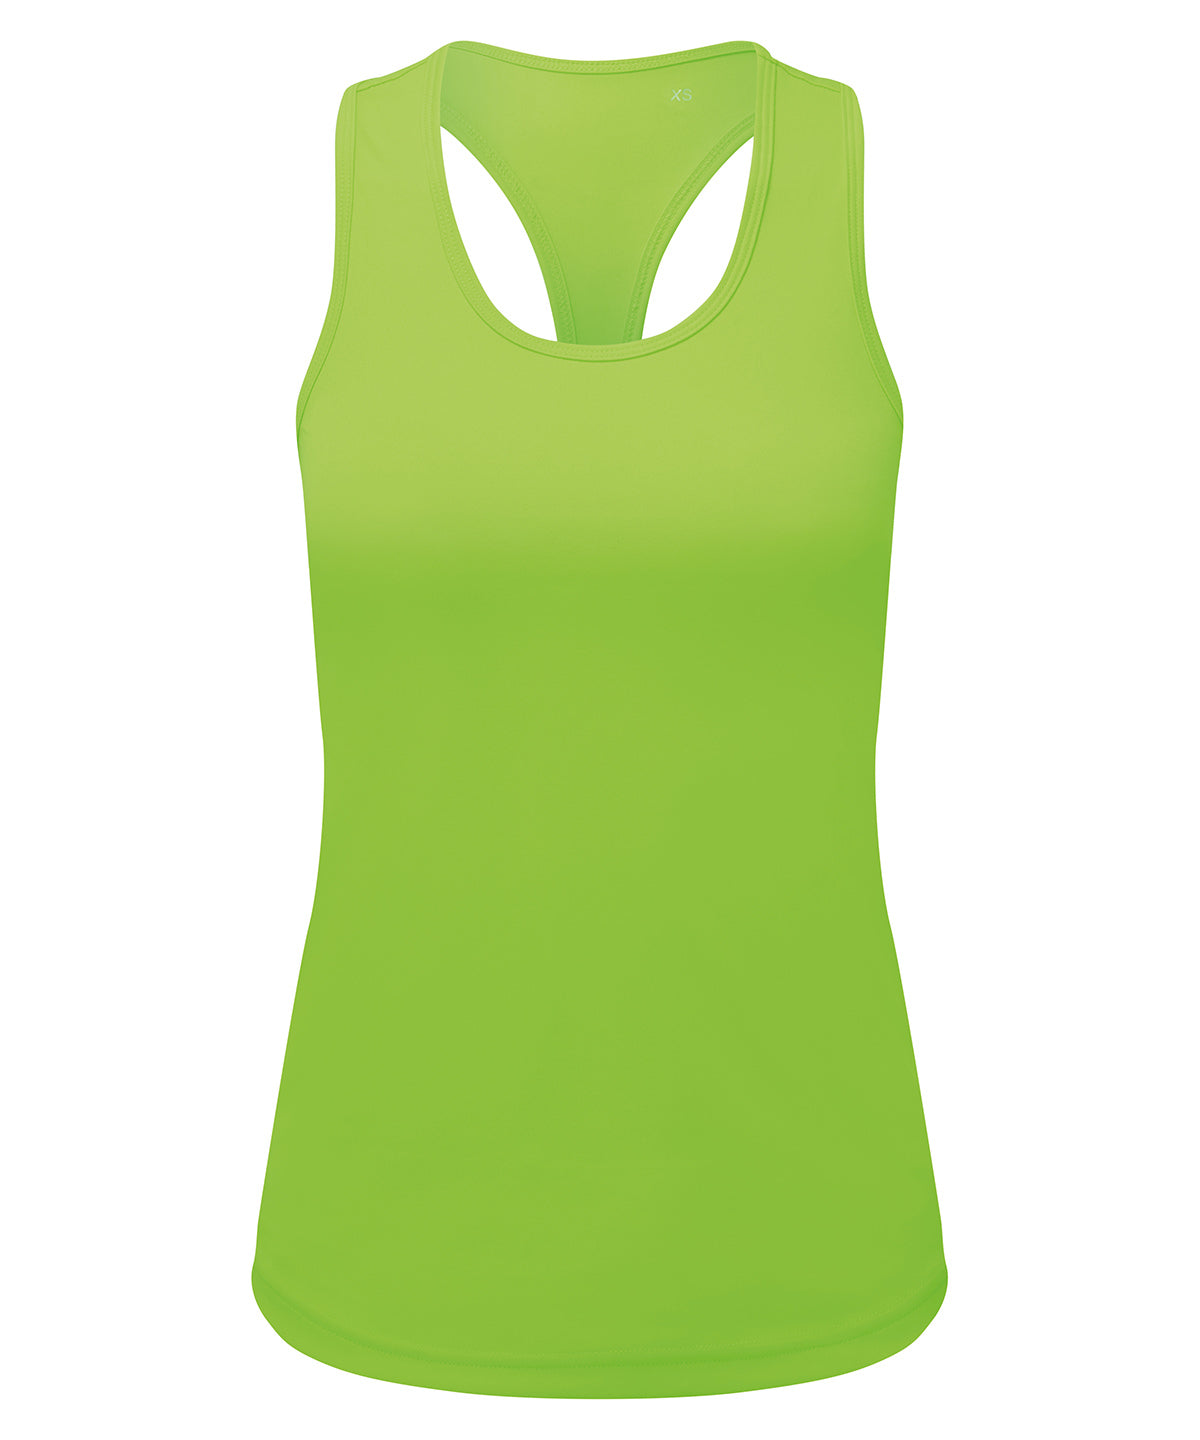 Vesti - Women’s TriDri® Recycled Performance Slim Racerback Vest